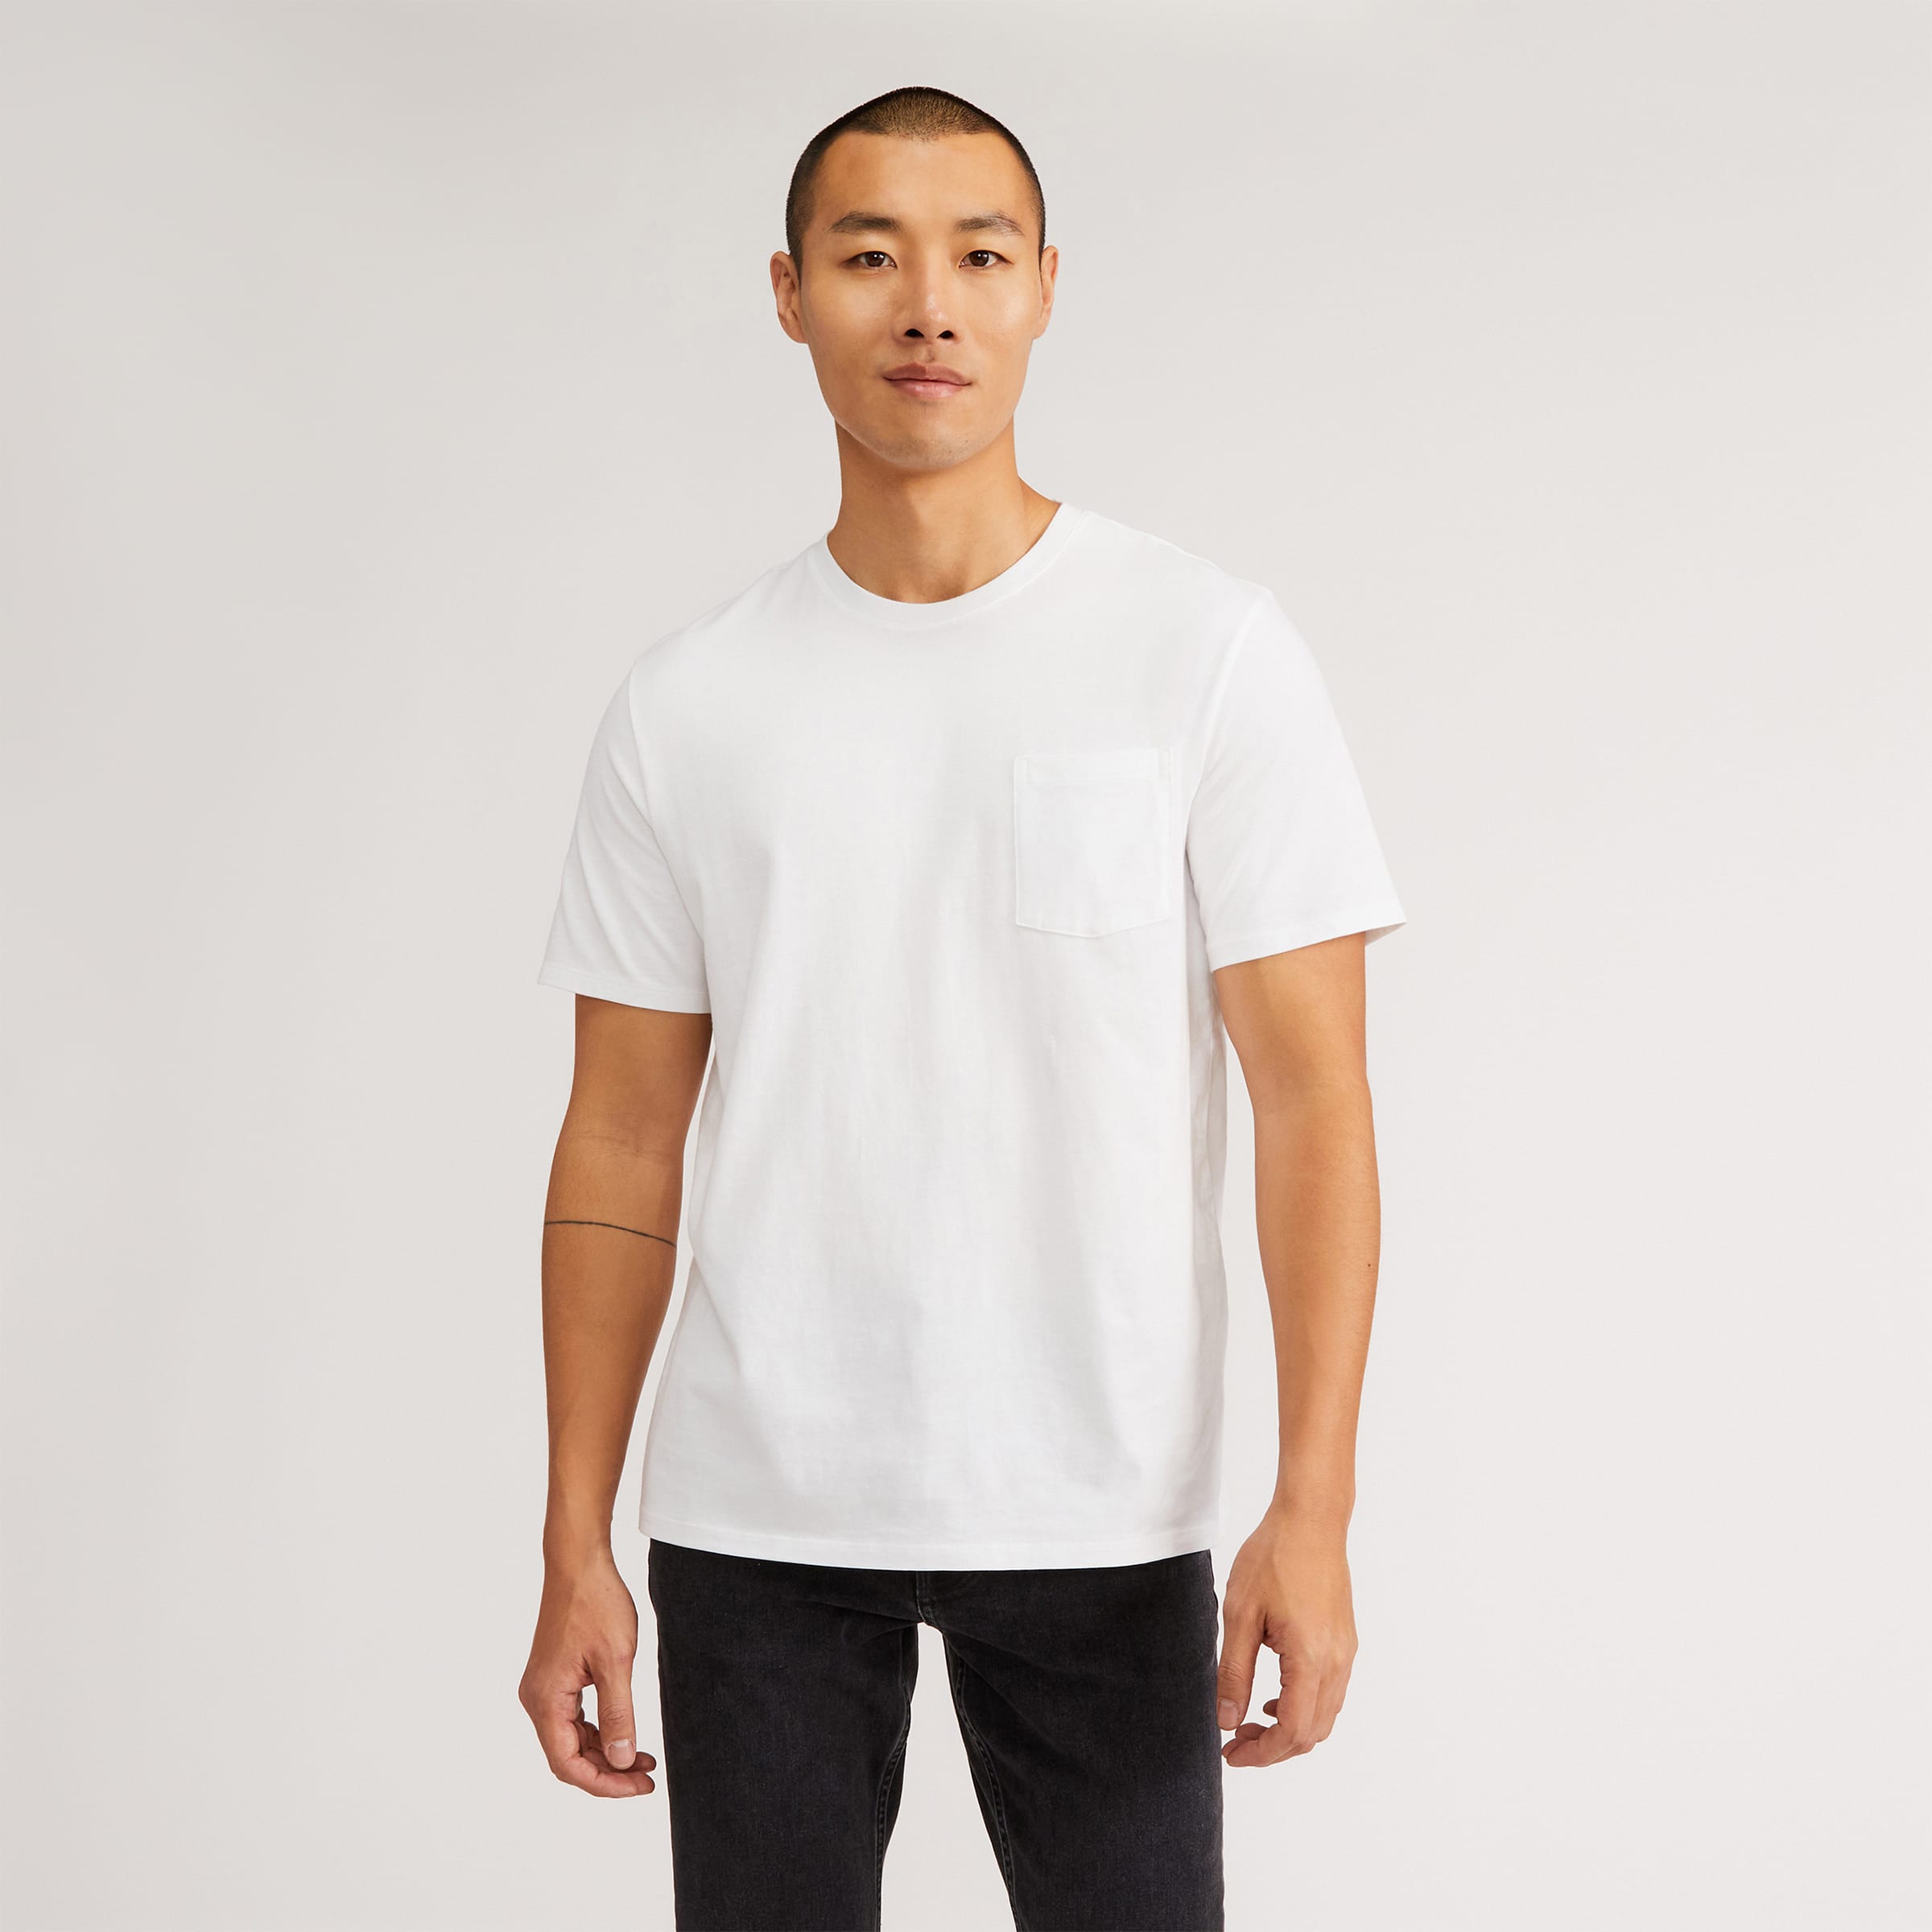 Everlane Men's Premium-Weight Pocket T-Shirt | Uniform in White, Size Extra Small